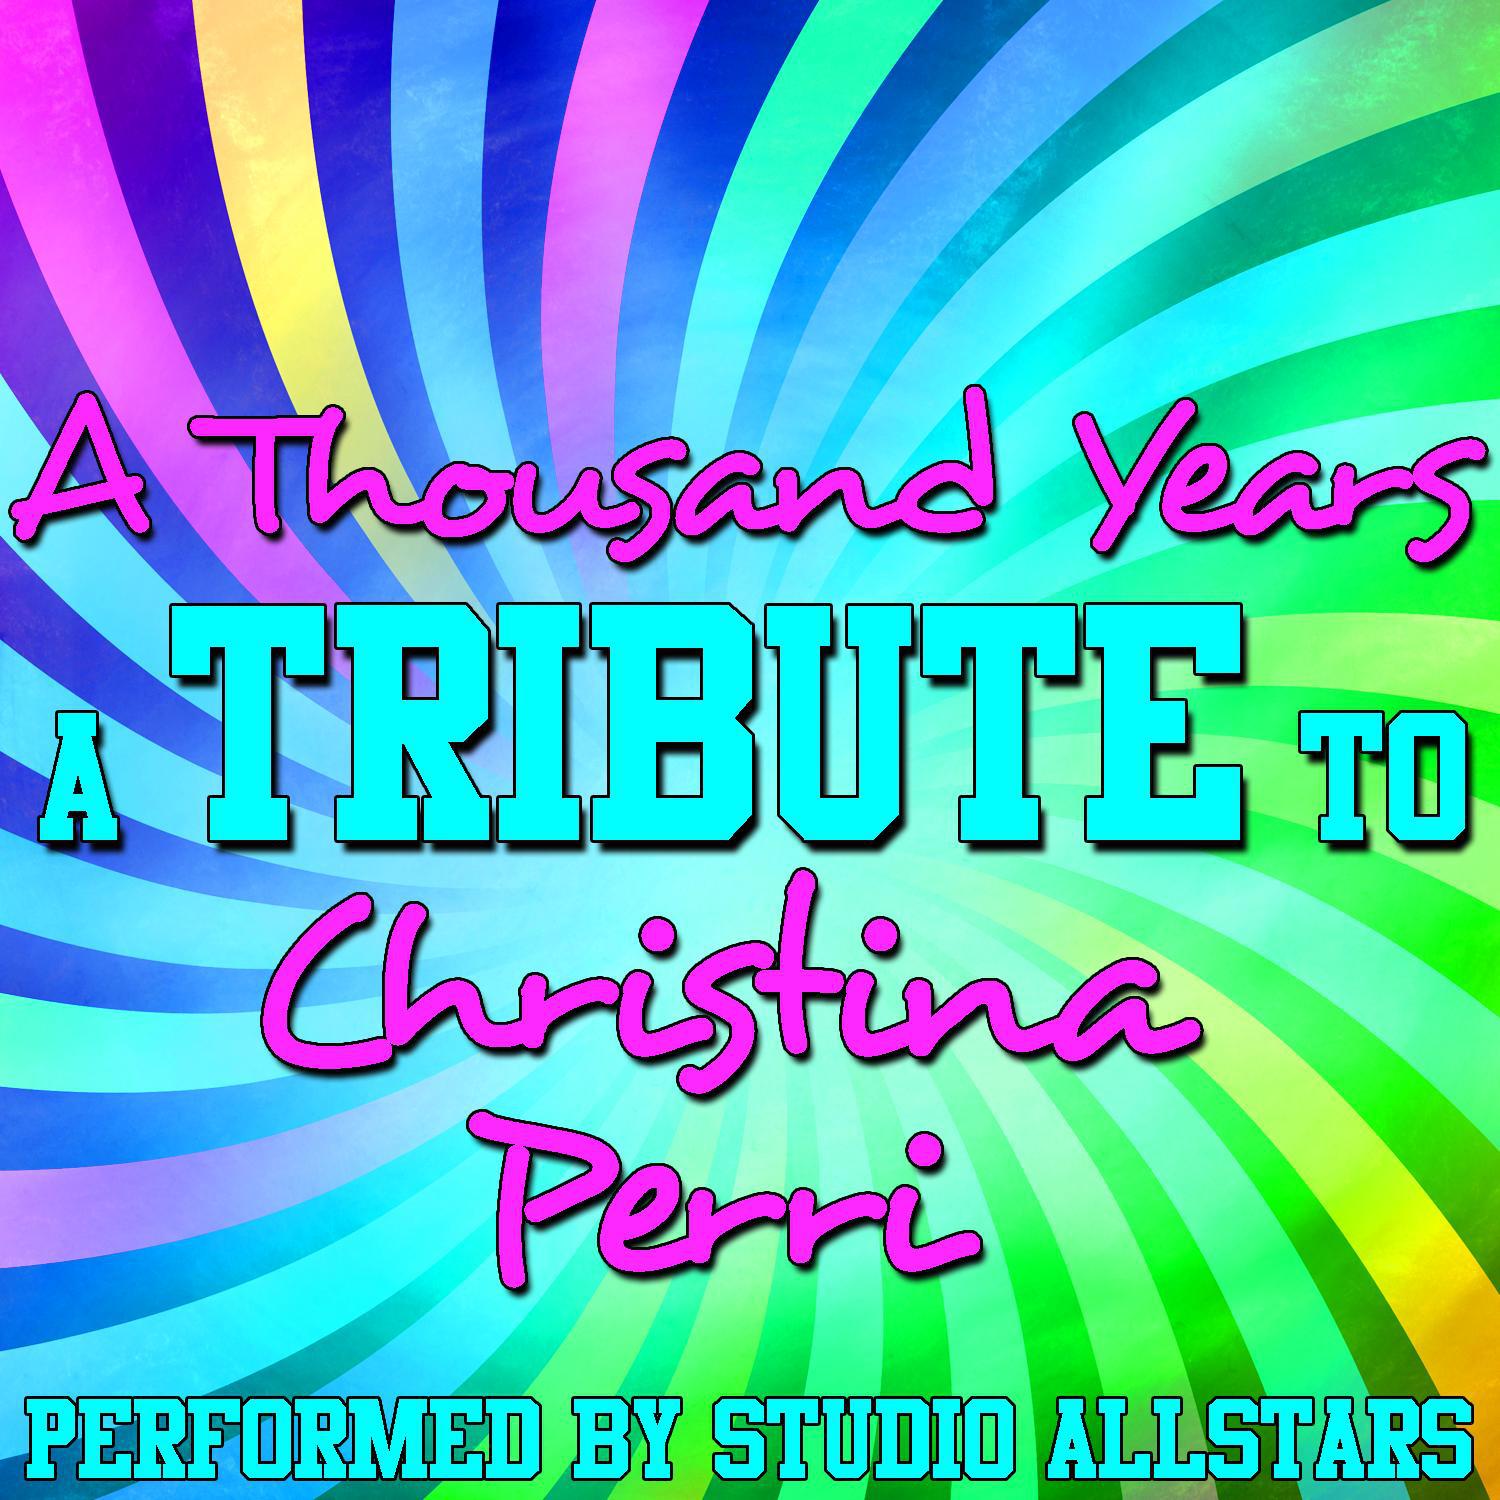 A Thousand Years (A Tribute to Christina Perri) - Single